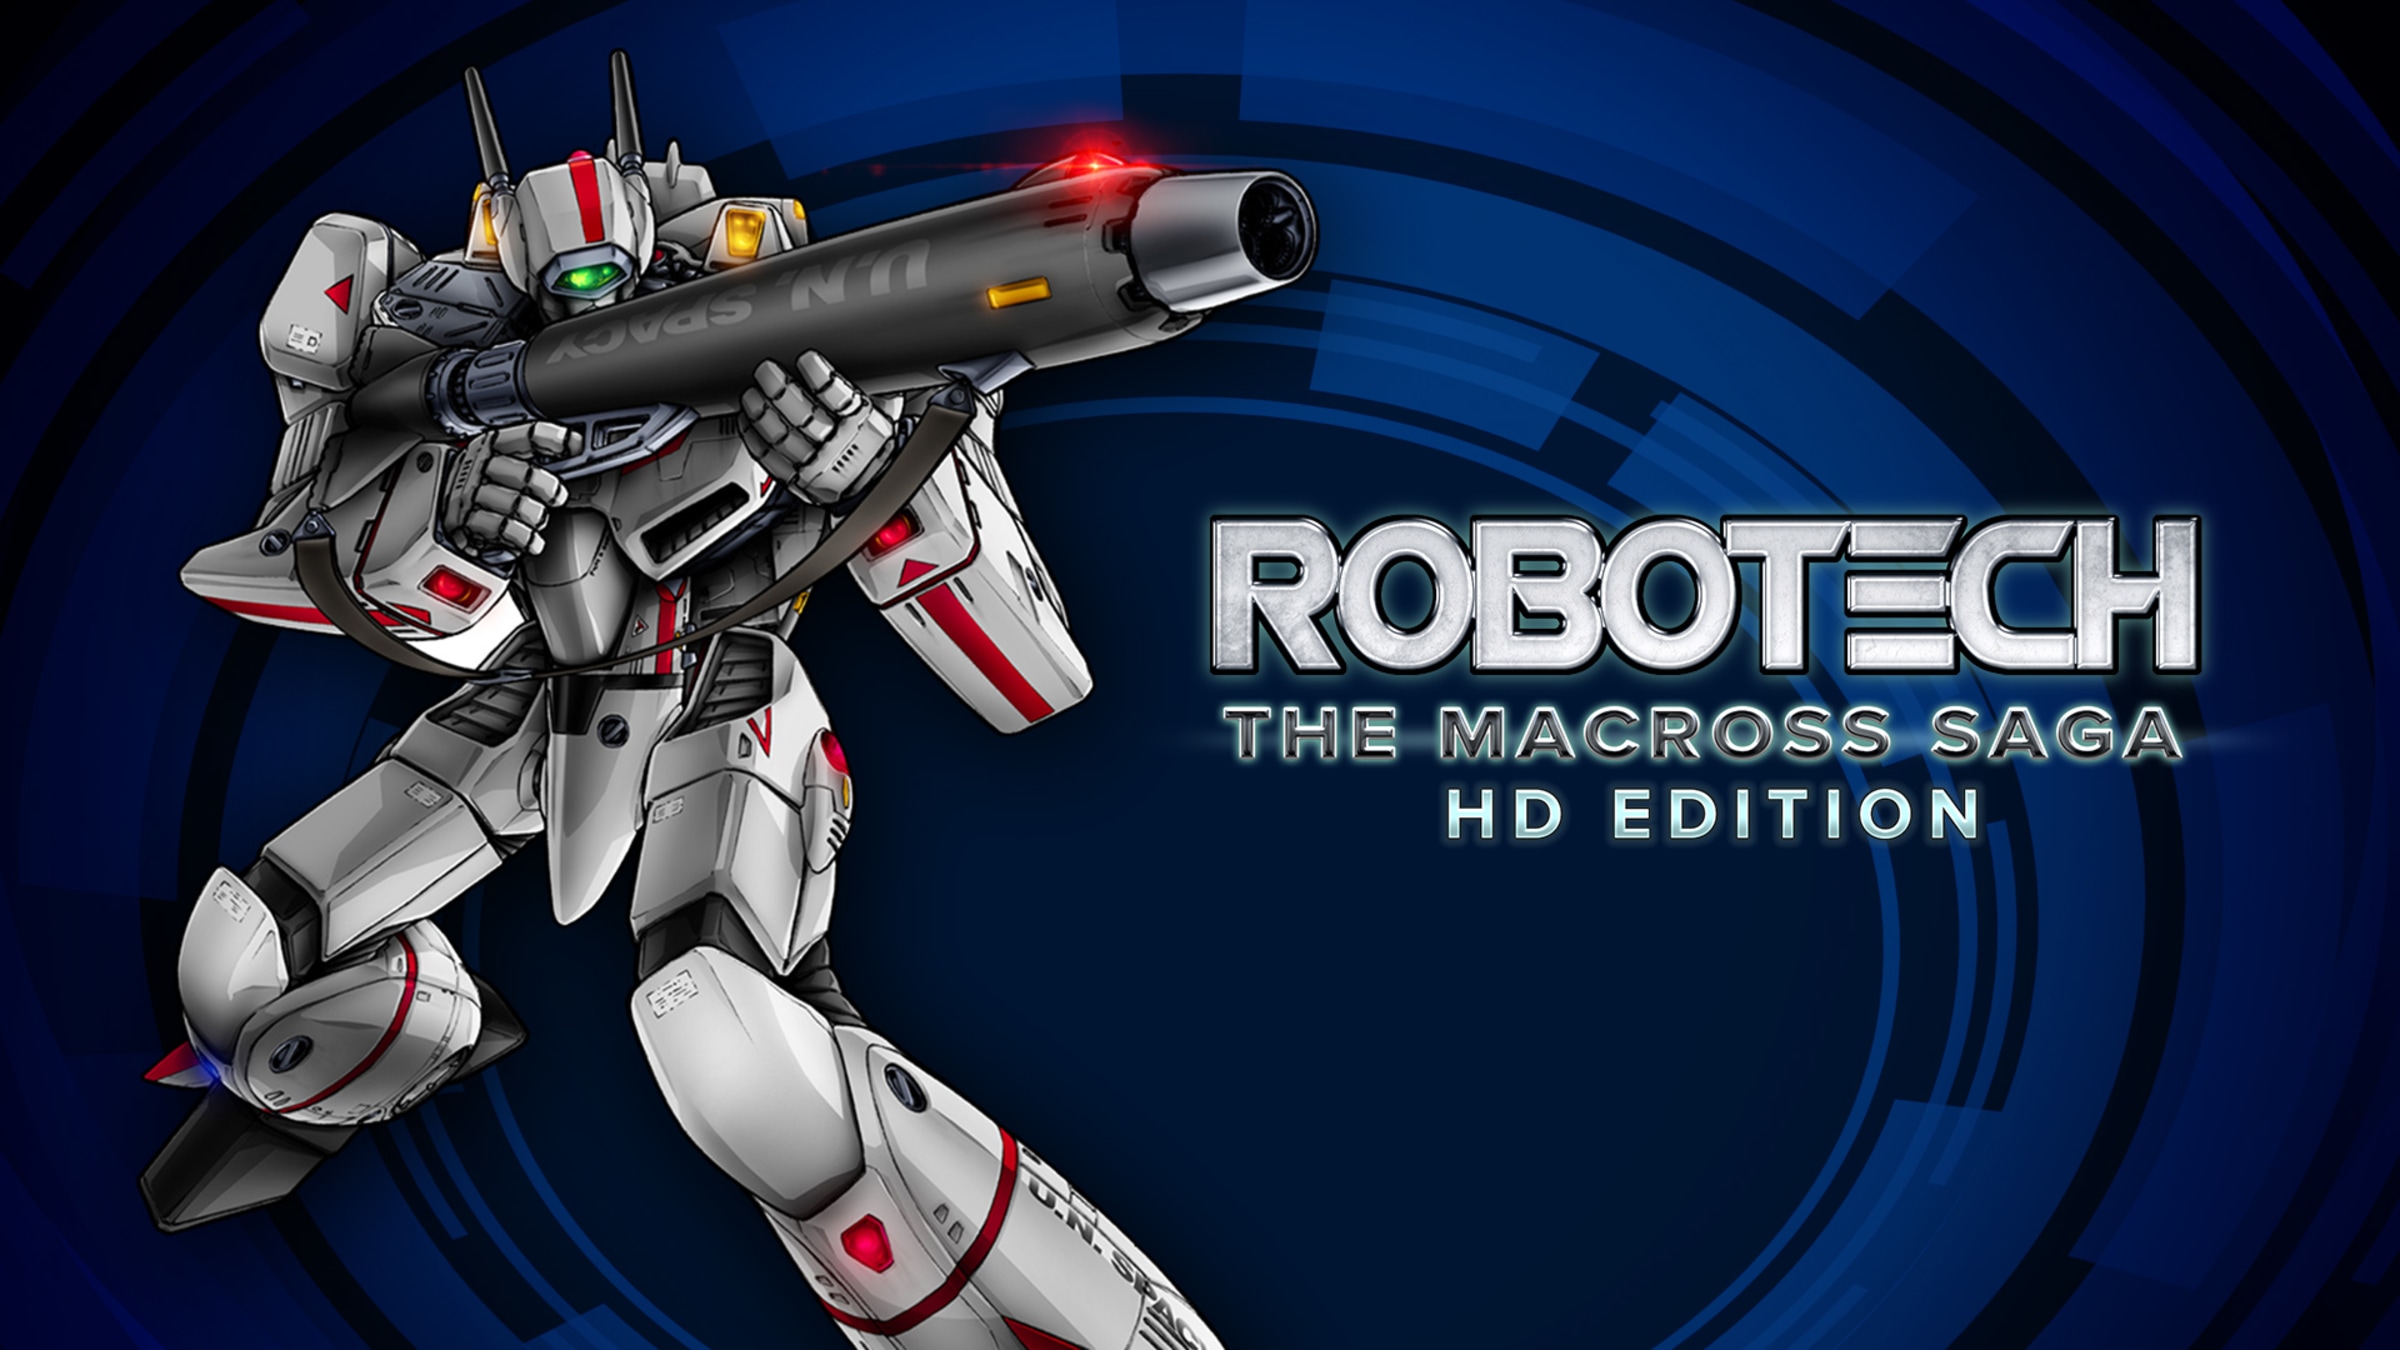 Robotech: The Macross Saga HD Edition for Nintendo Switch